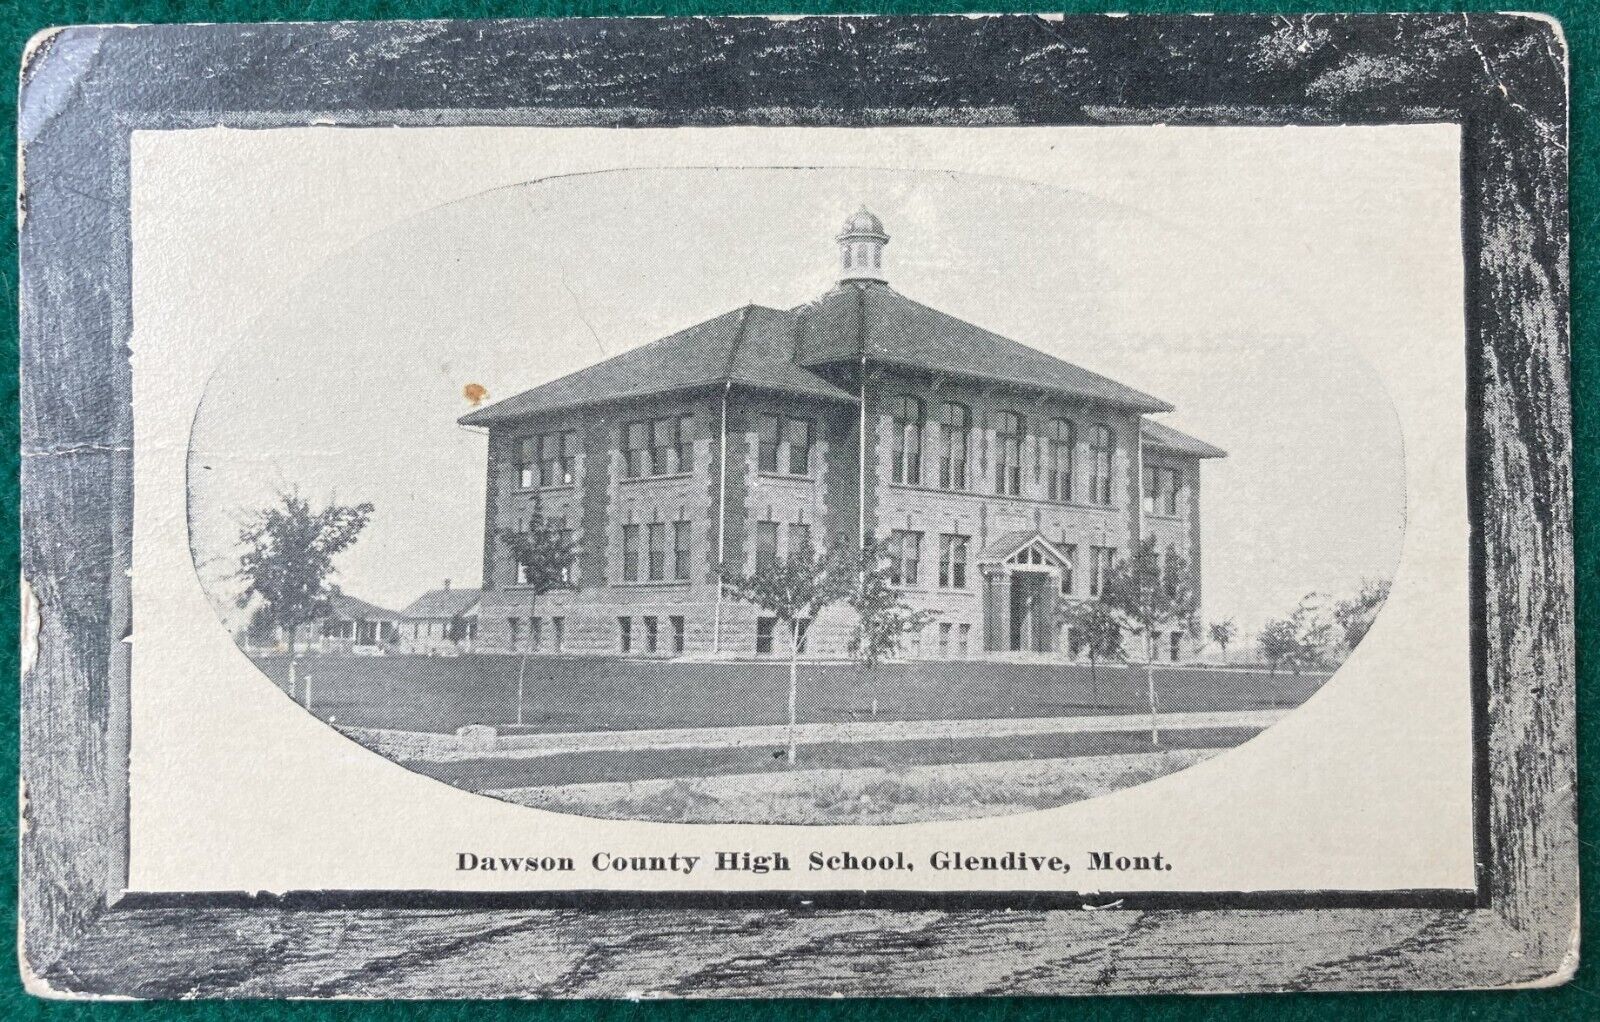 Dawson County High School Glendive MONTANA Litho Postcard circa 1910 building